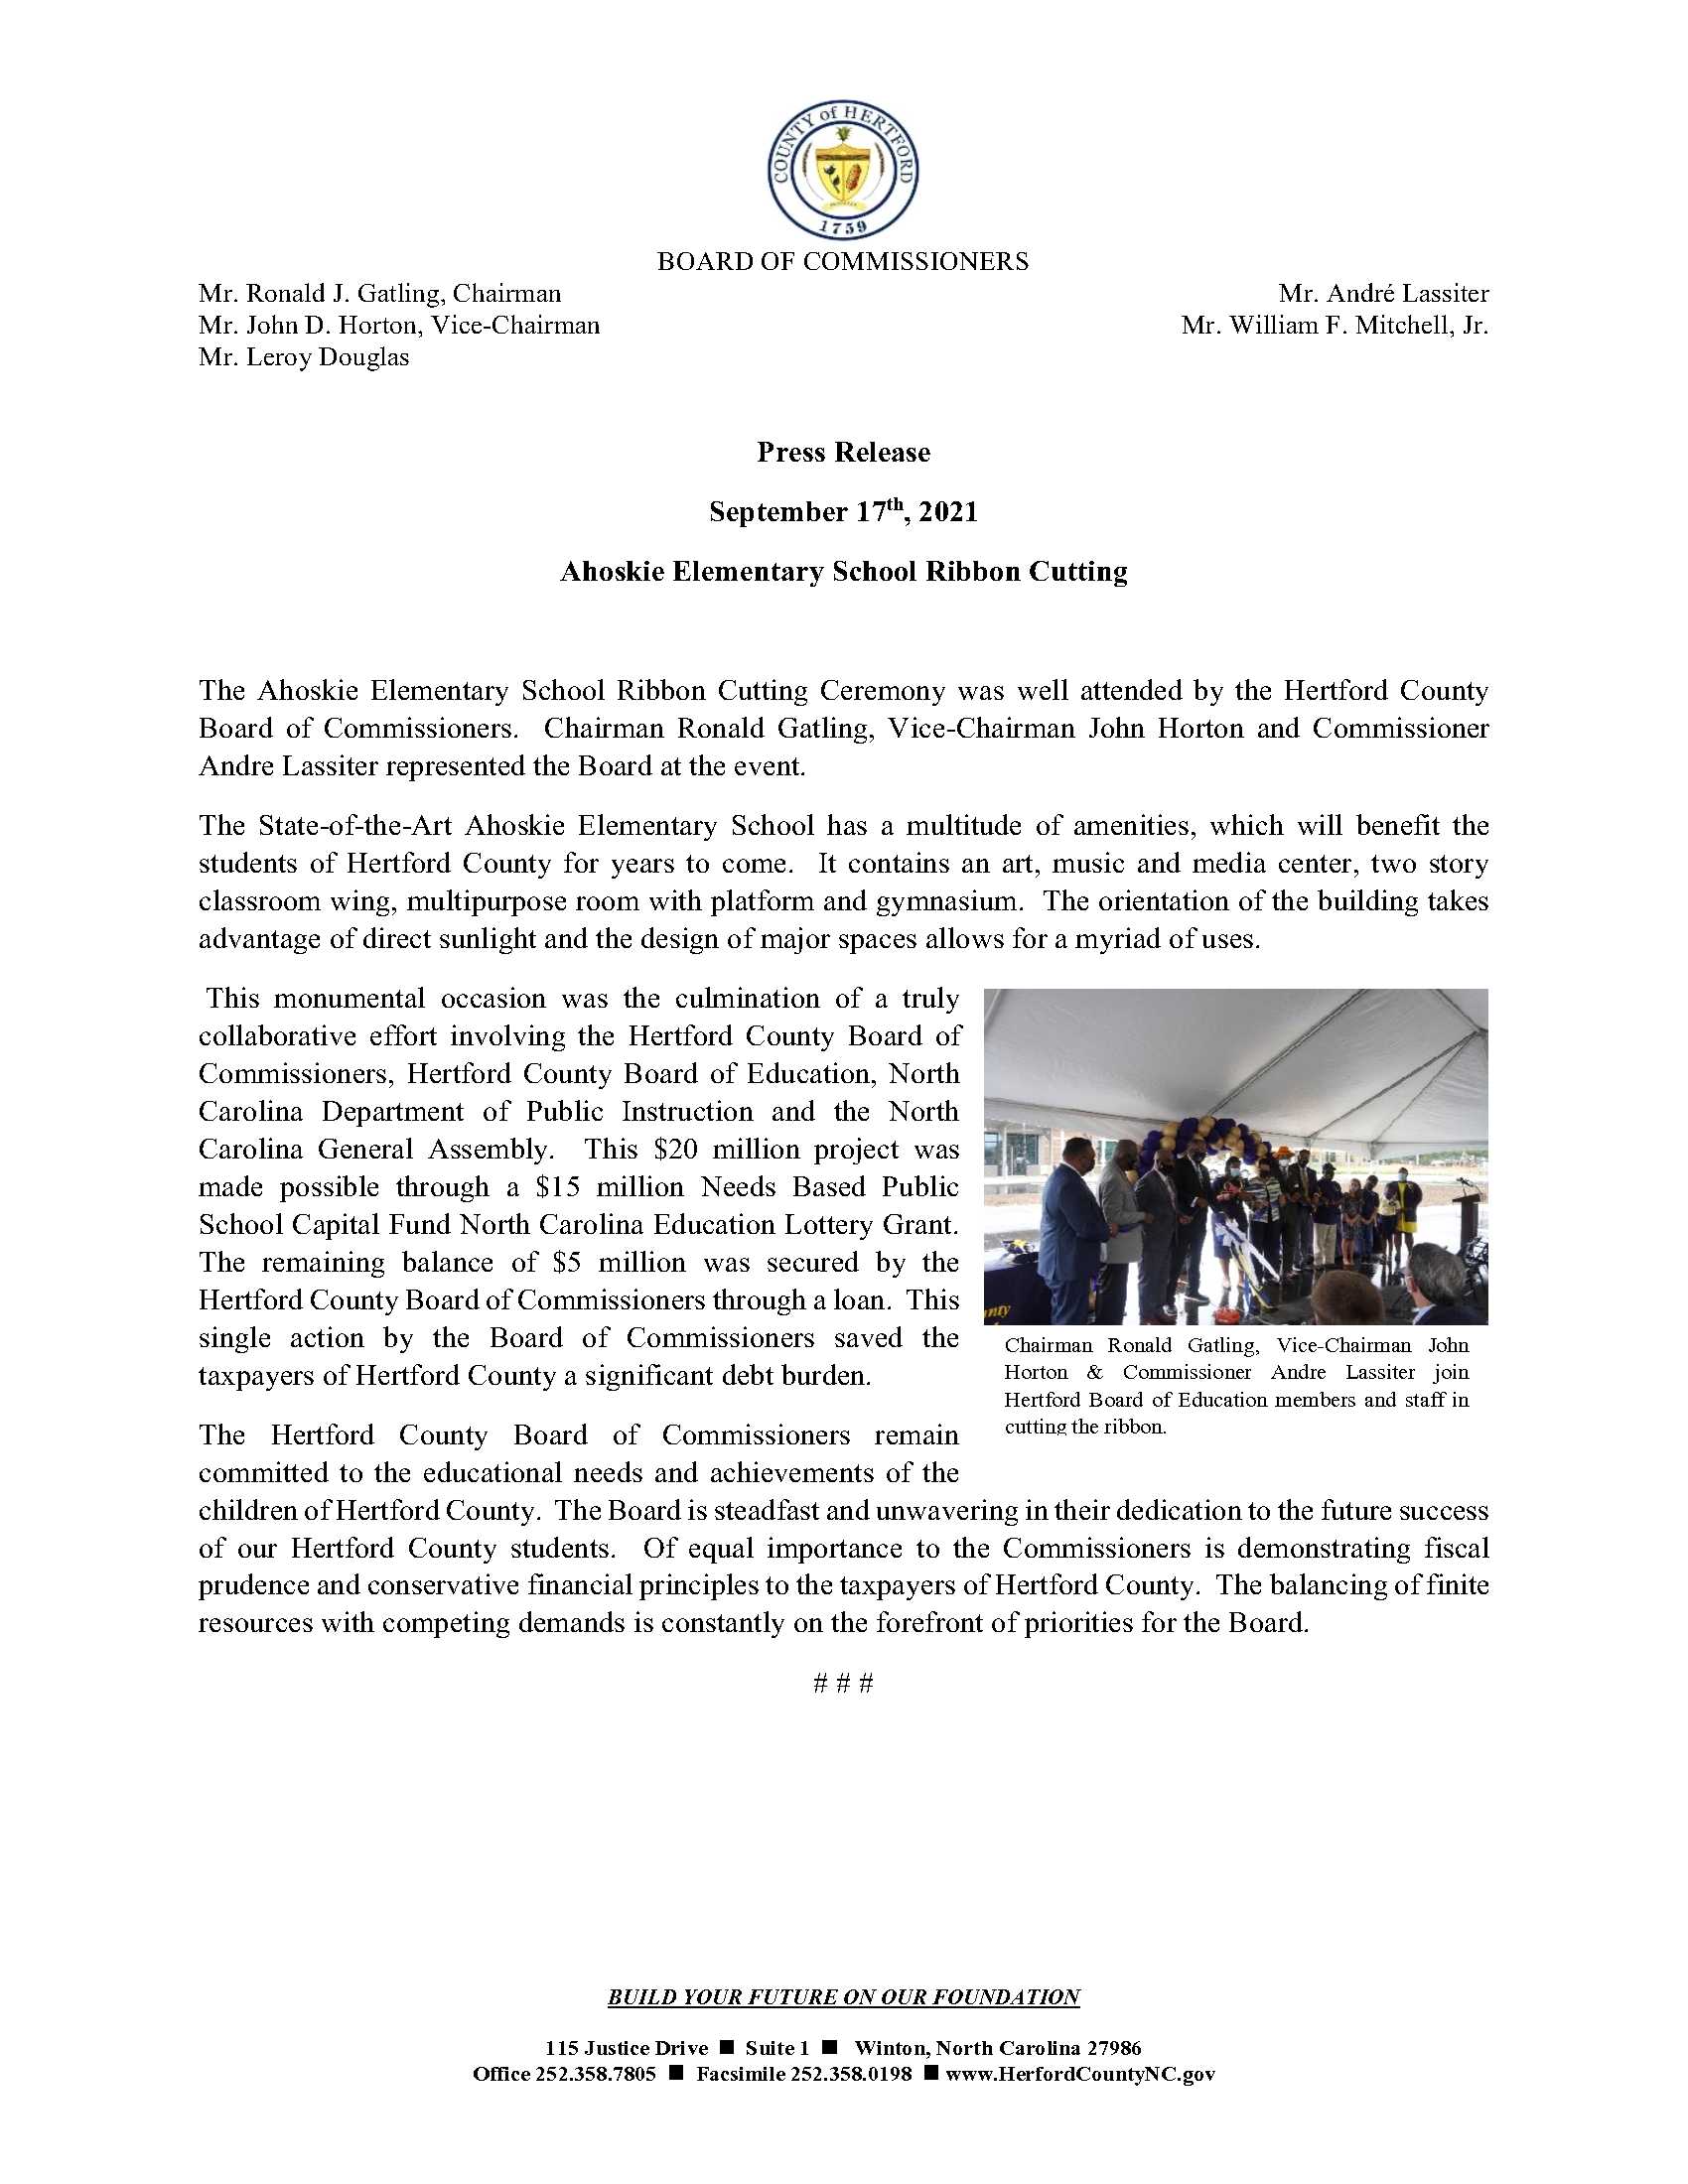 Ahoskie Elementary School Press Release 091721